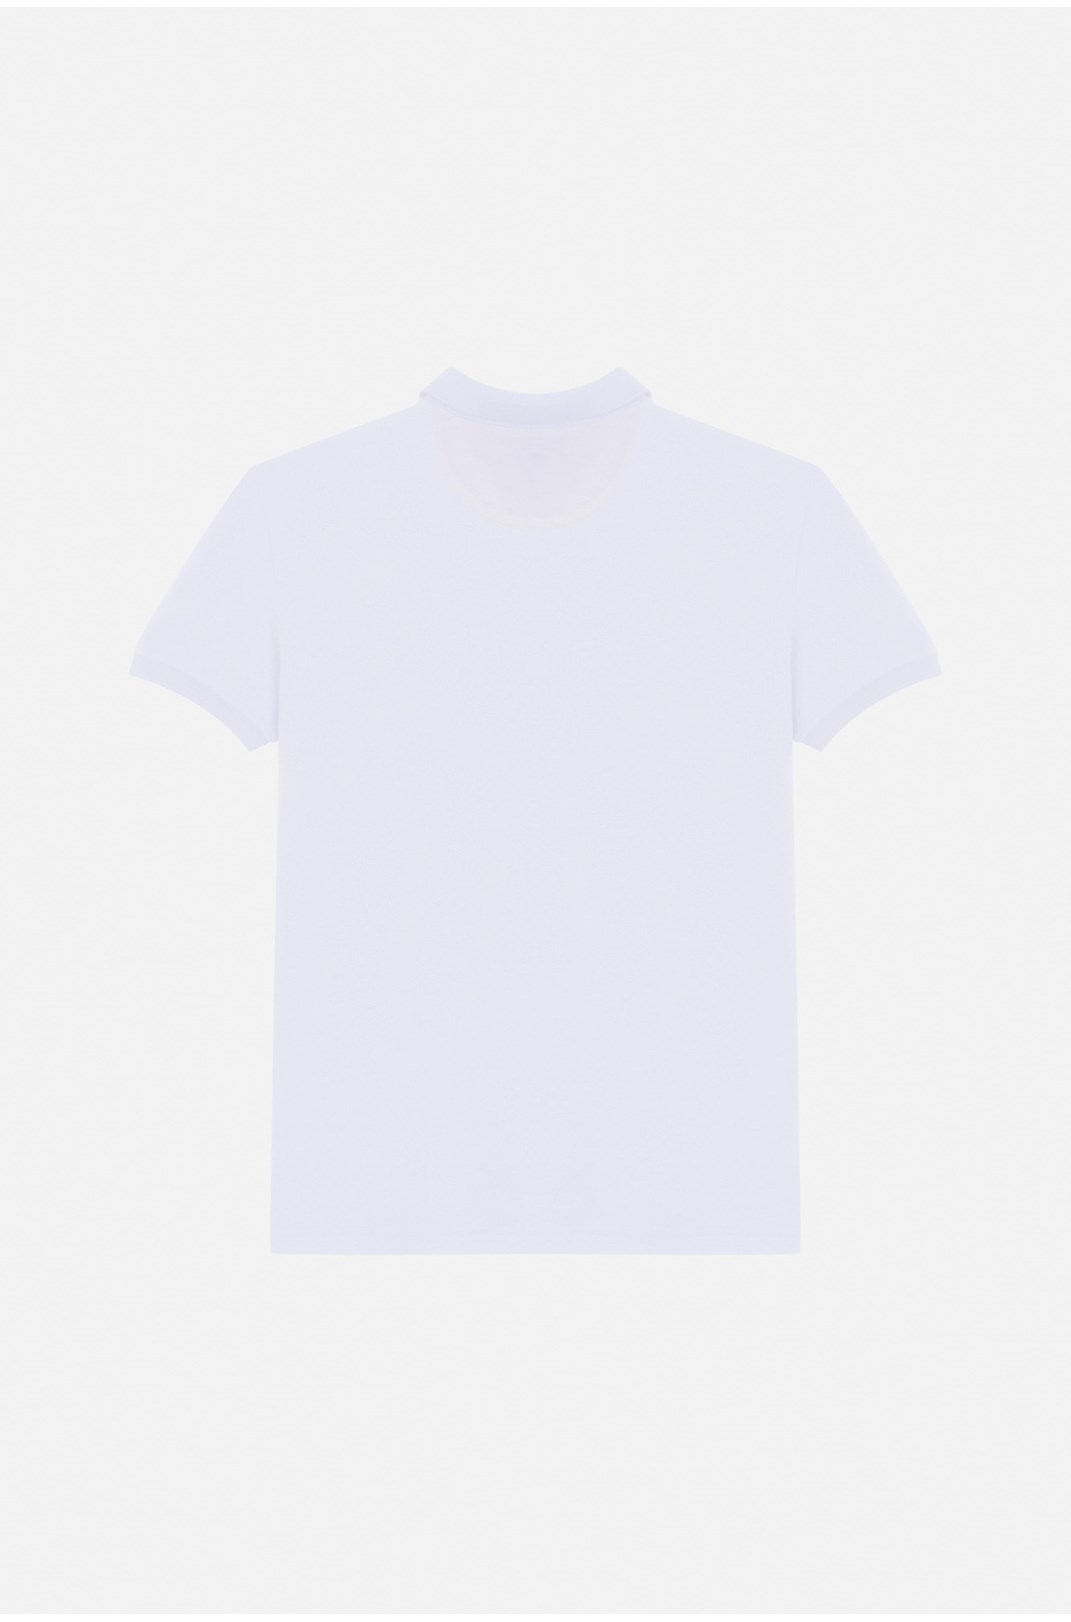 Camiseta Polo Approve Basic Branco